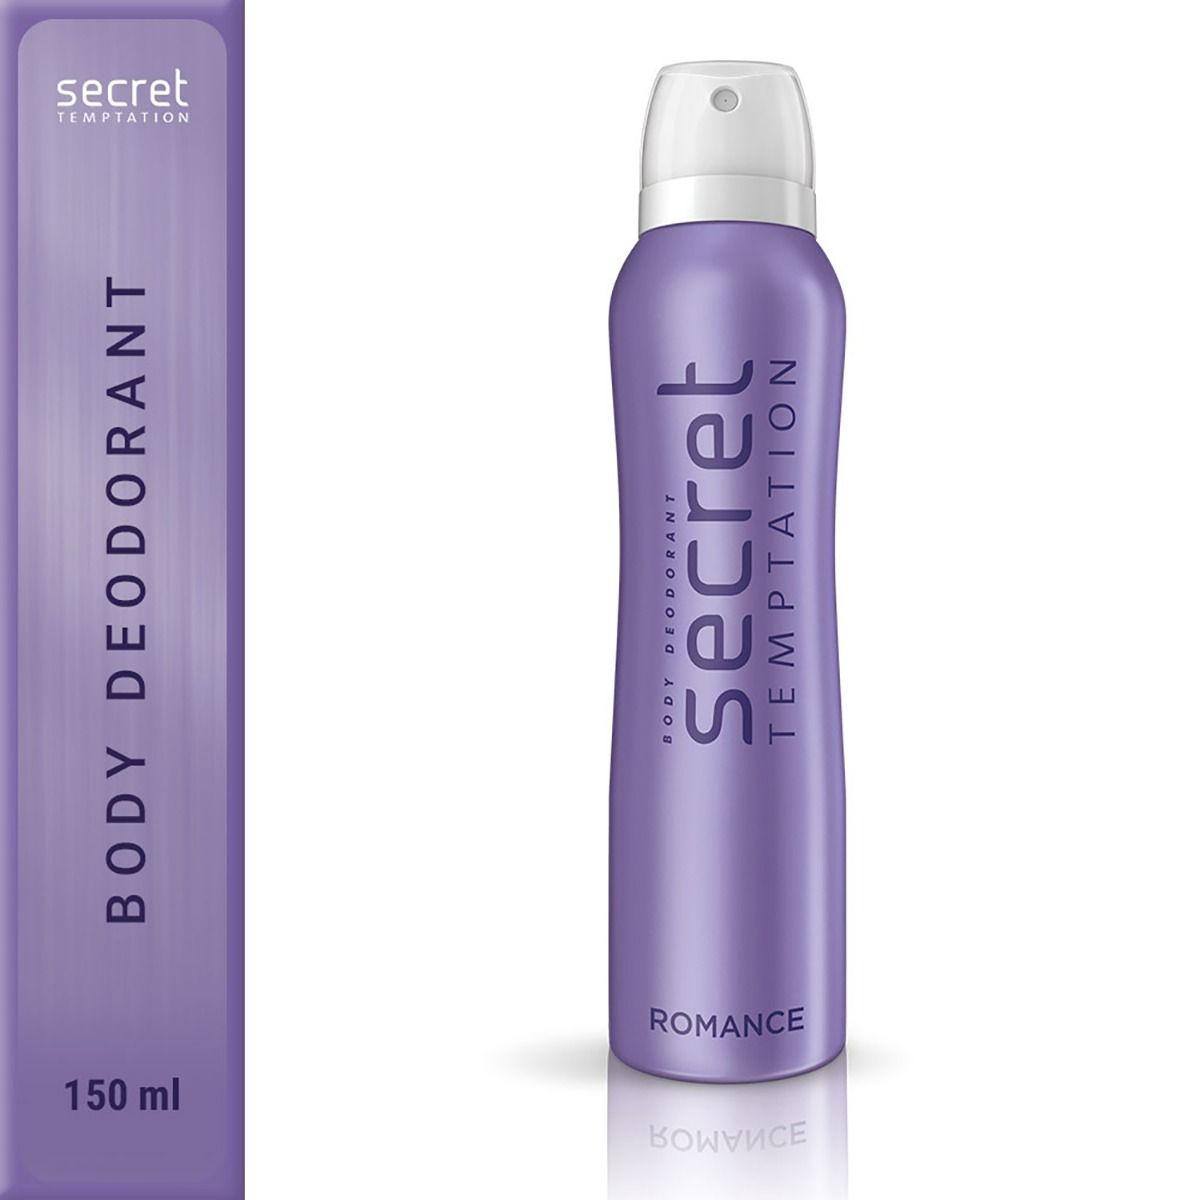 Buy Secret Temptation Romance Body Deodorant, 150 ml Online